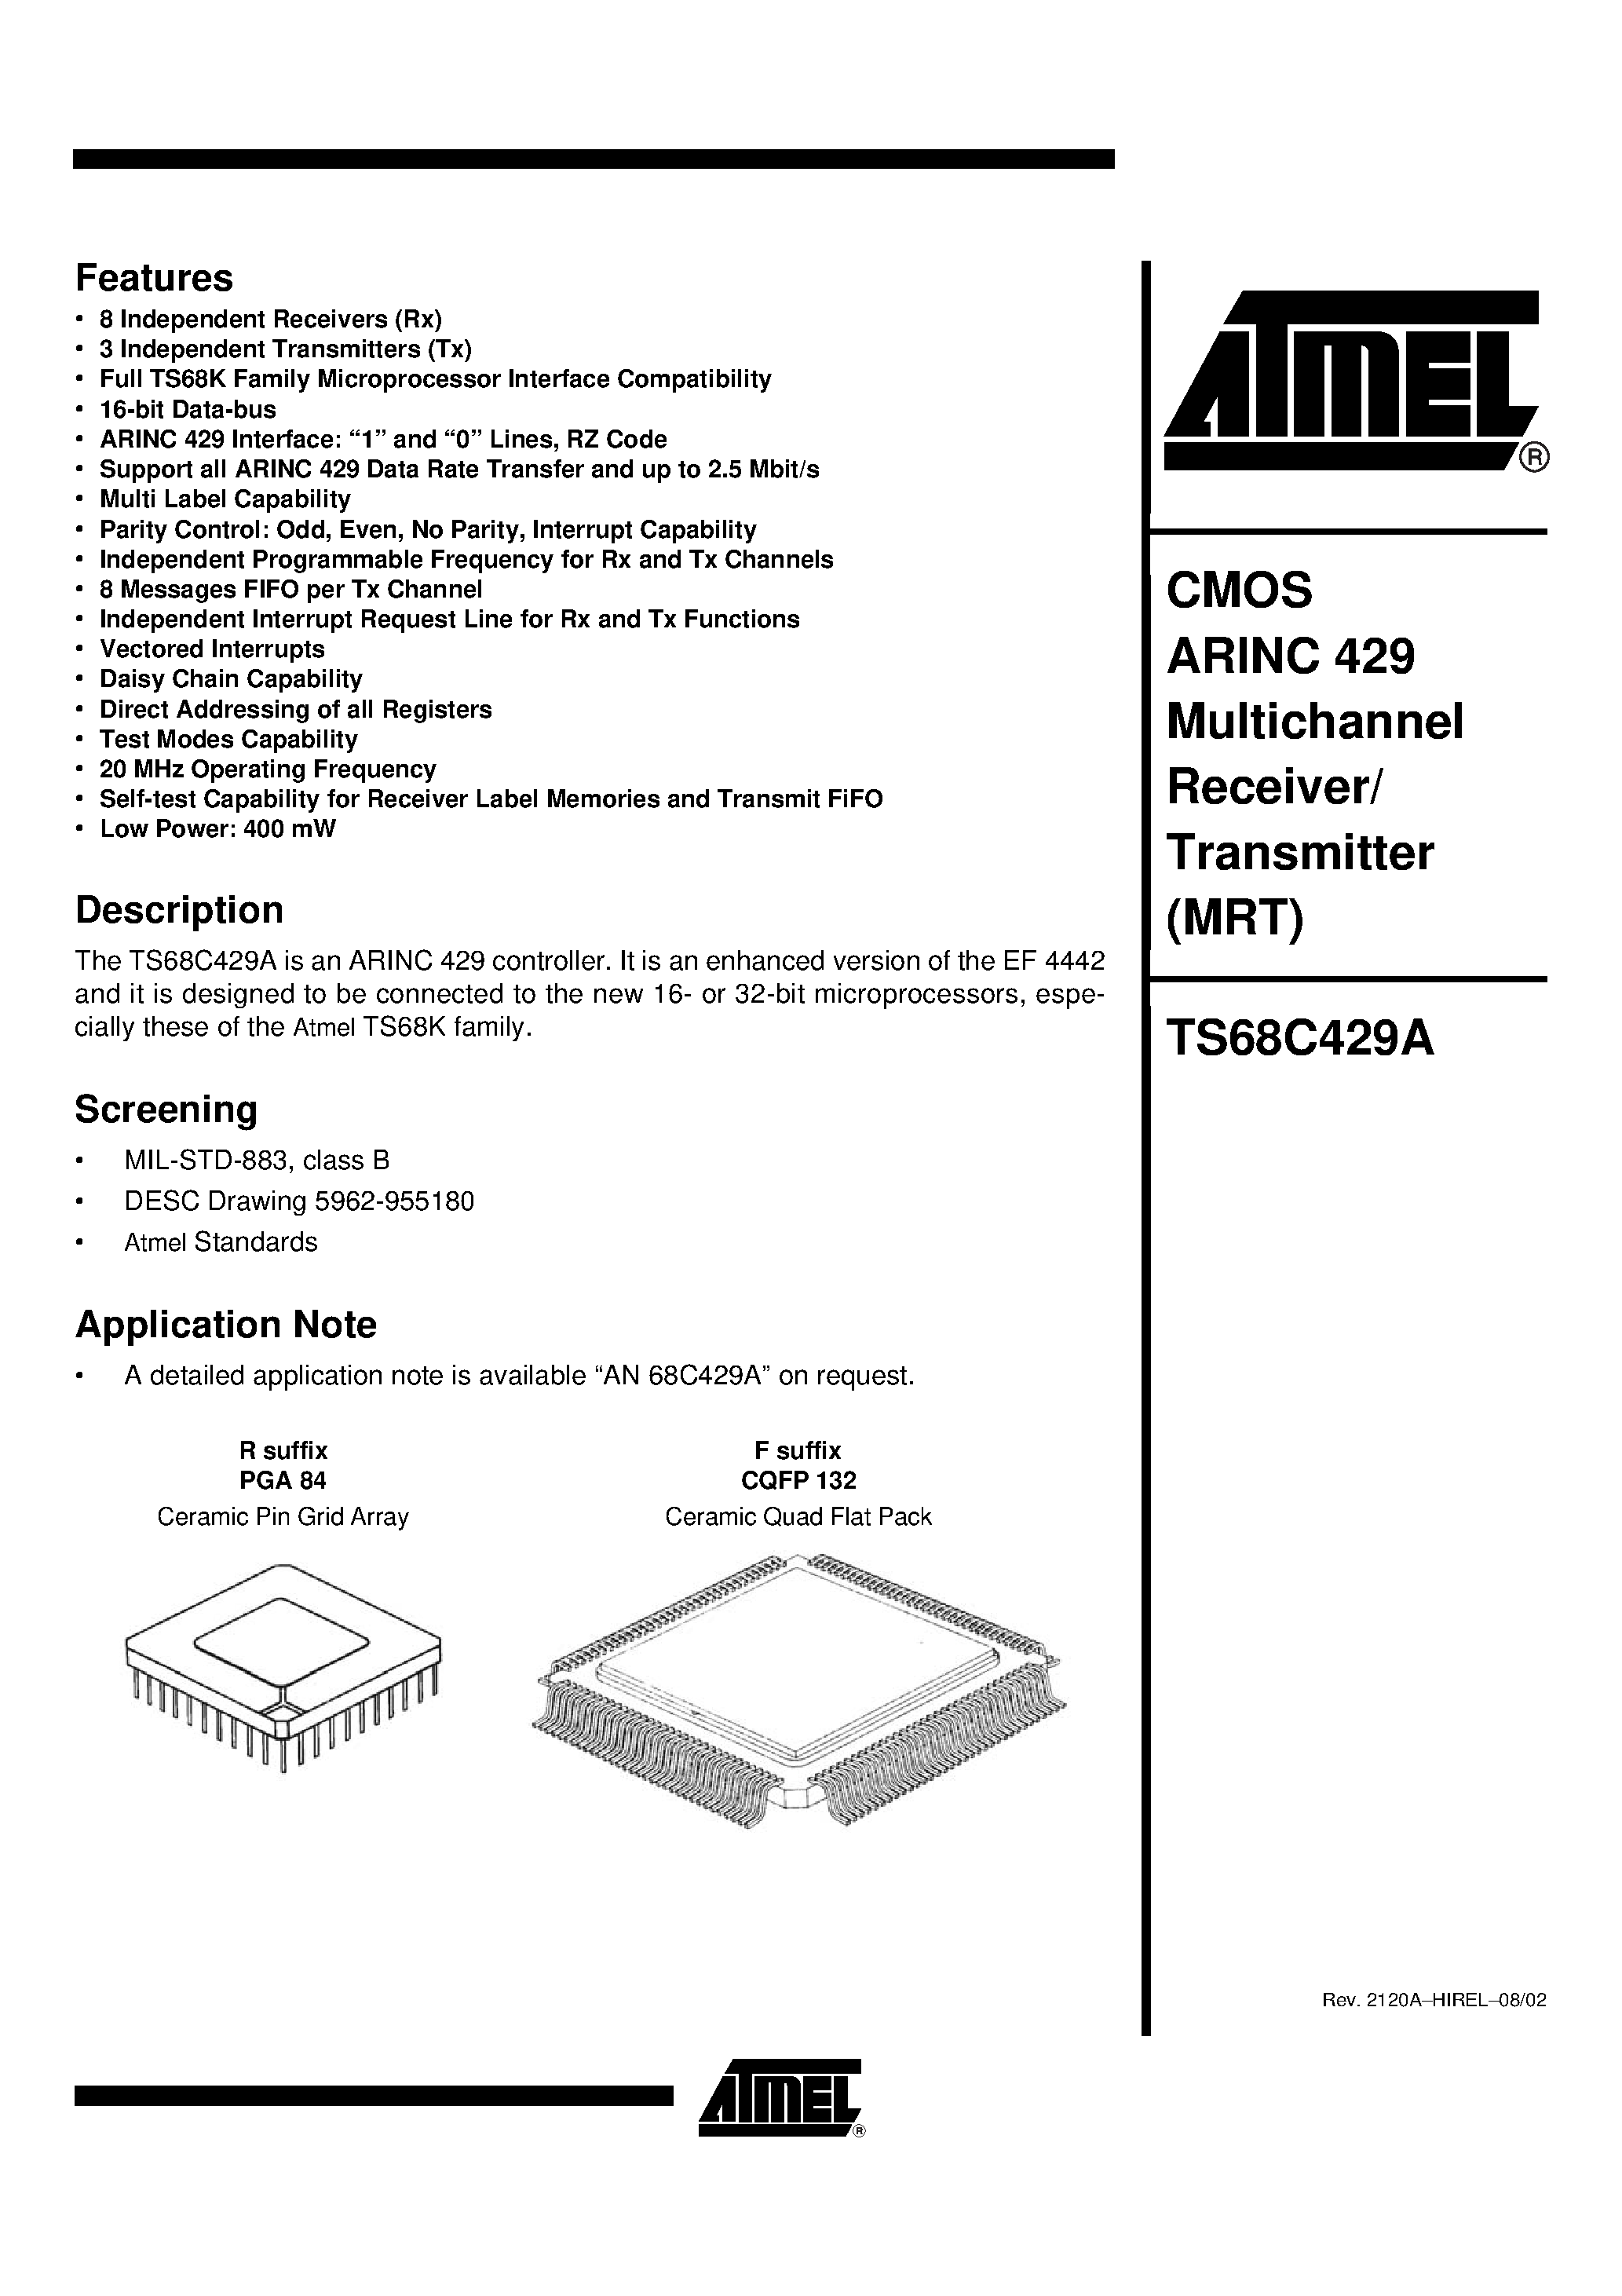 Даташит TS68C429A - CMOS ARINC 429 Multichannel Receiver/ Transmitter MRT страница 1